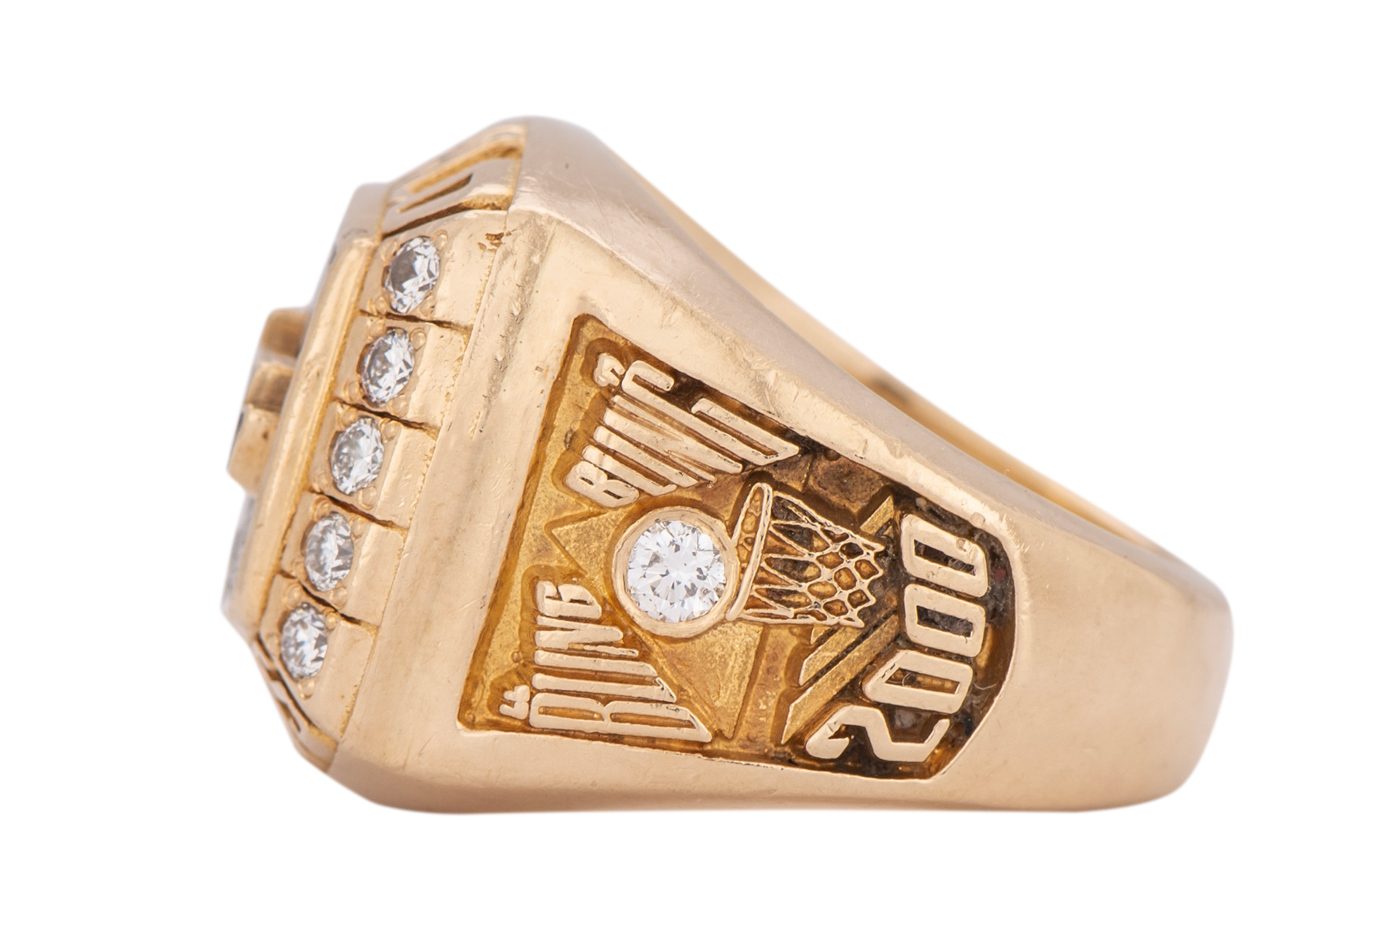 https://hypebeast.com/image/2020/05/kobe-pamela-bryant-los-angeles-lakers-championship-ring-206-000-usd-auction-003.jpg